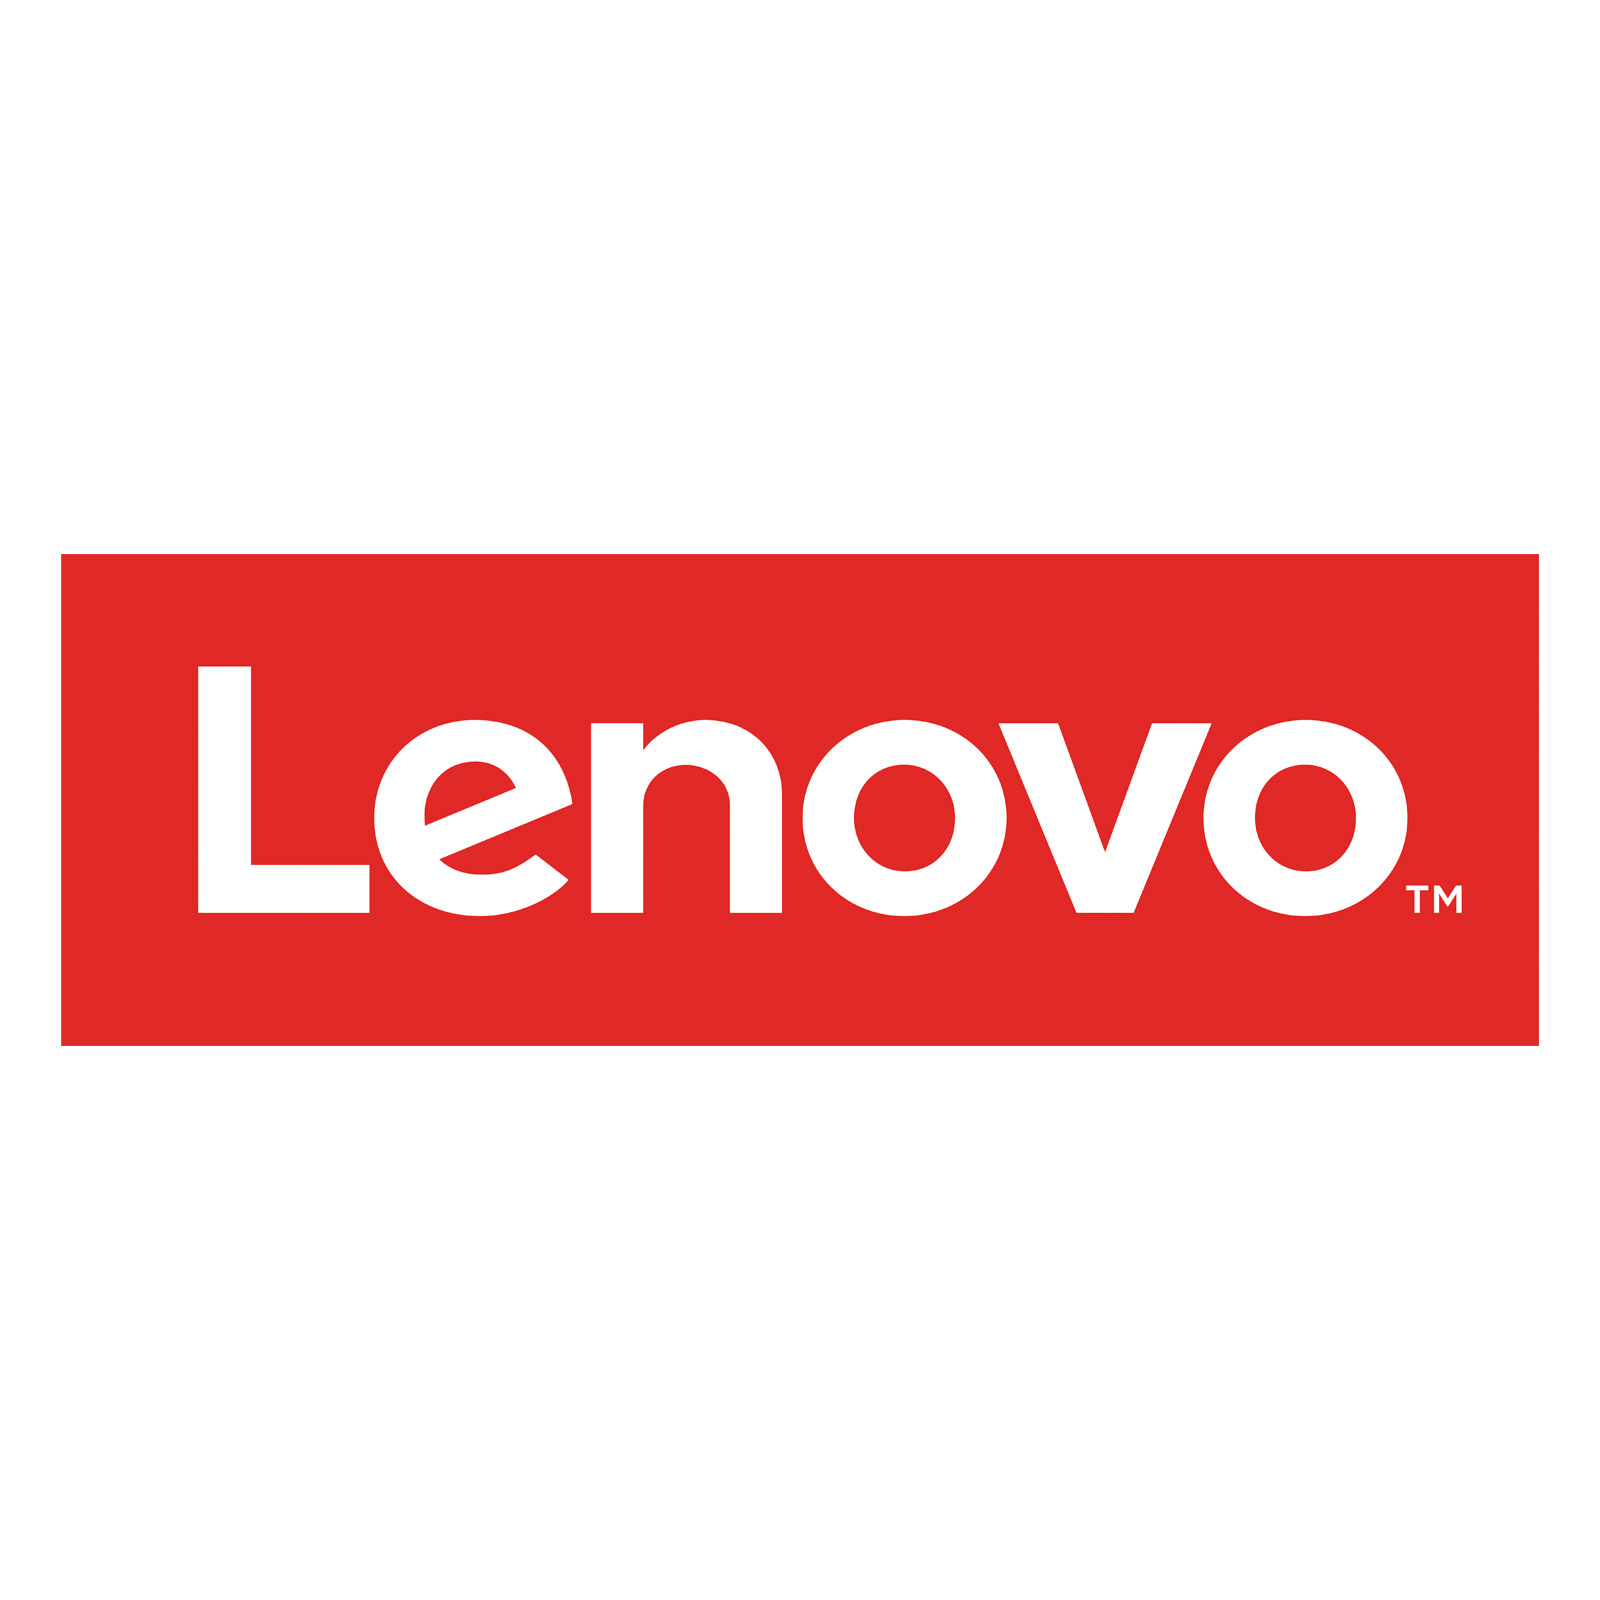 Lenovo Windows Server 2016 Standard ROK, Base License and Media, 16 Core - image 1 of 3